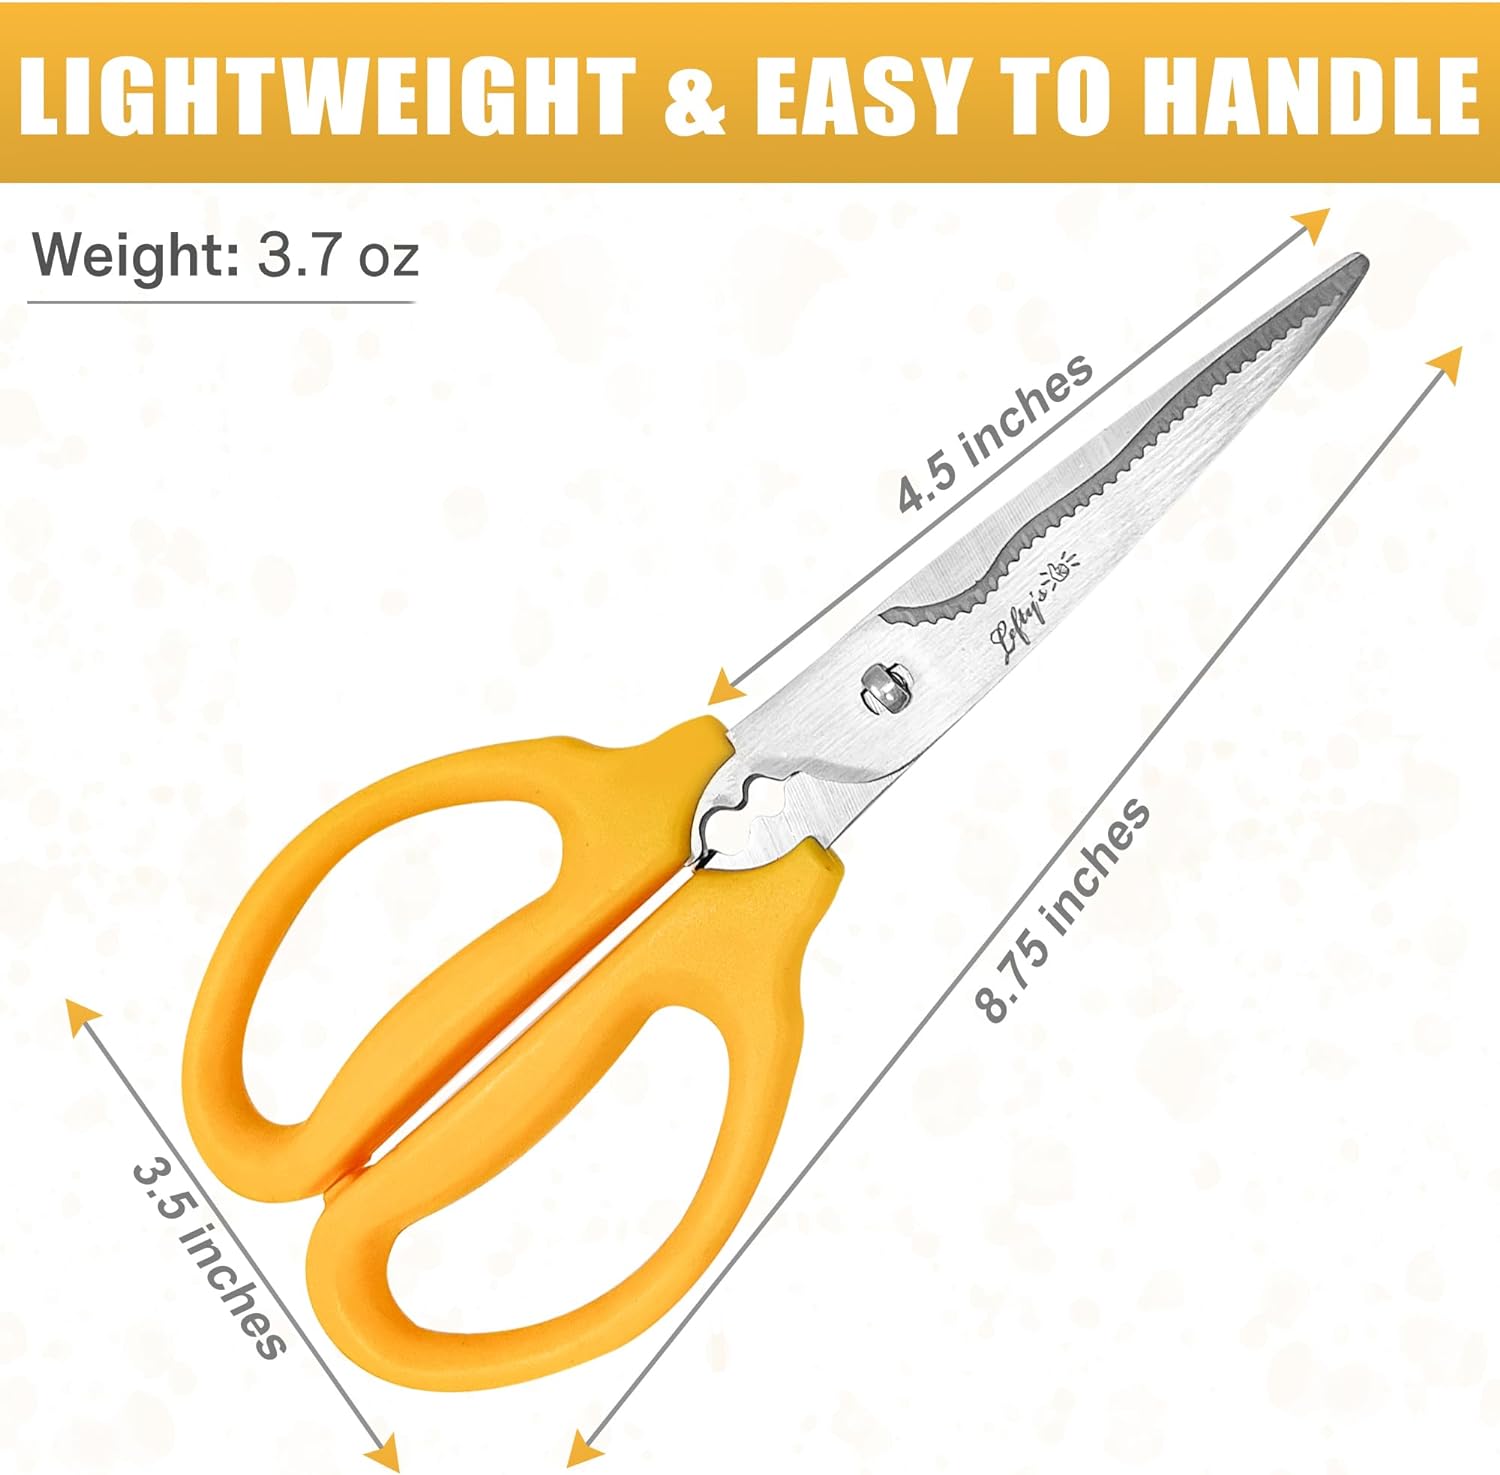 Lefty’s Left Handed Kitchen Scissors Review